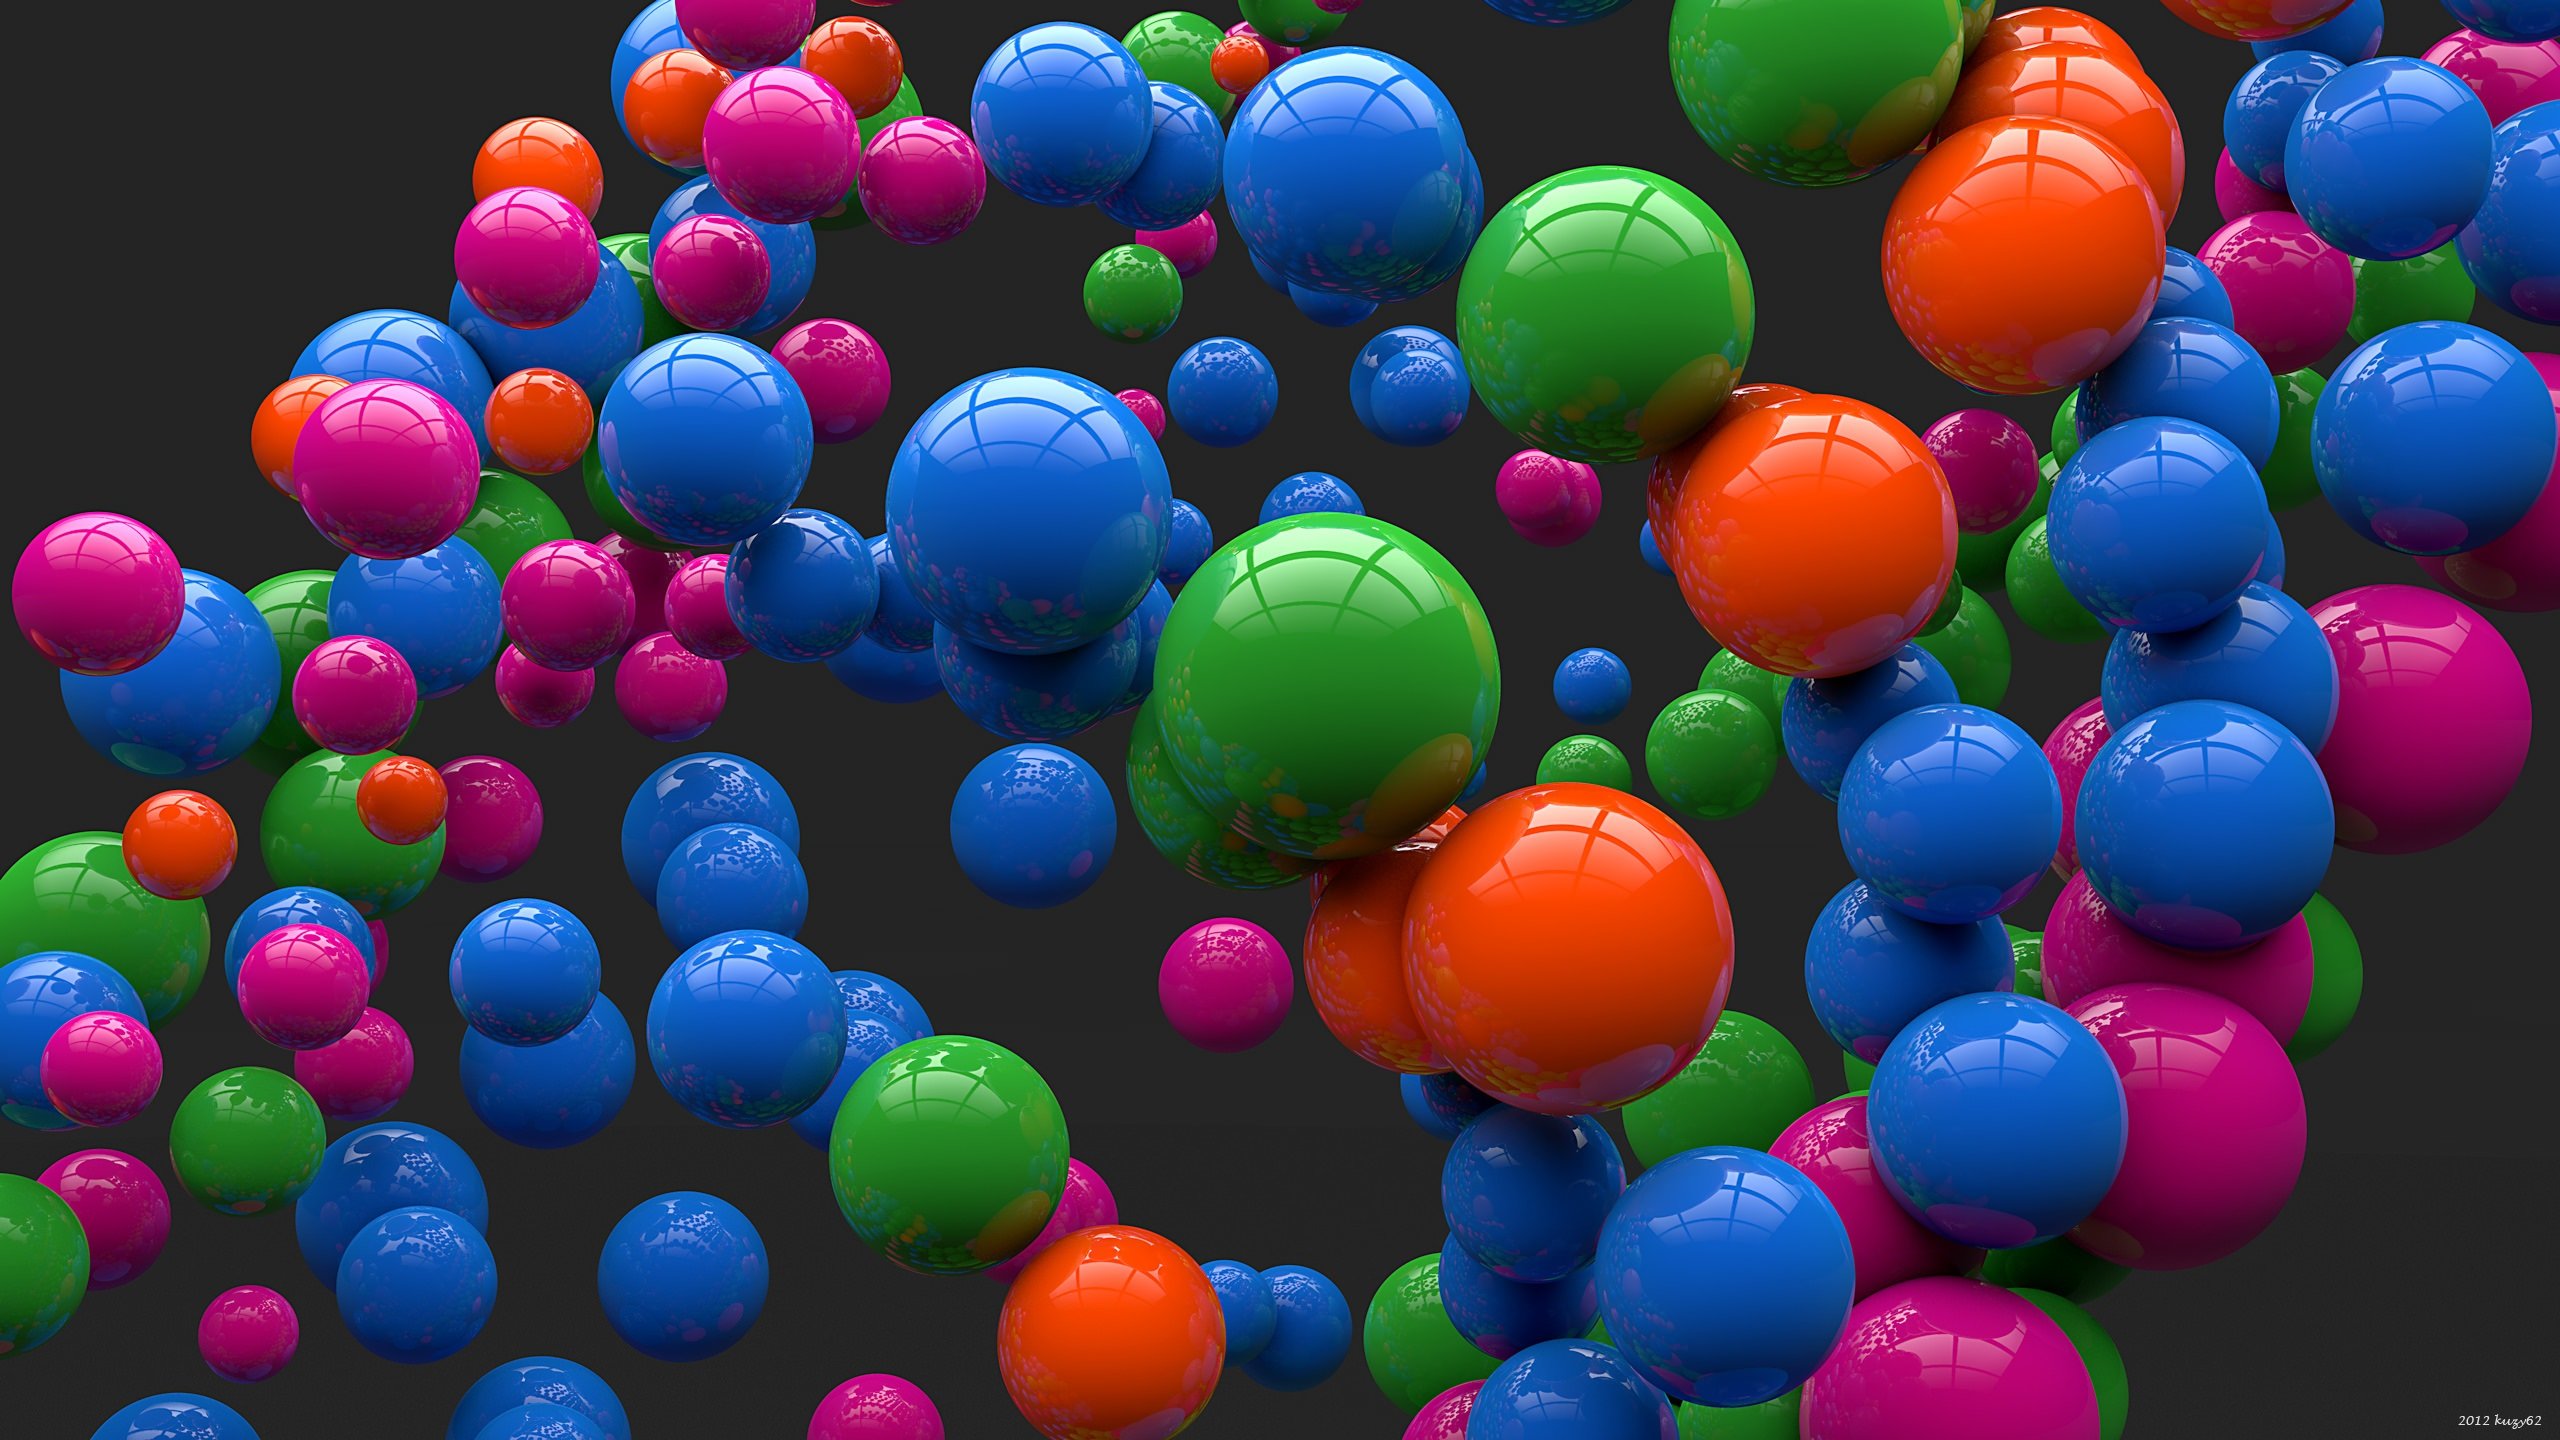 Colorful Balls Wallpaper for Desktop 2560x1440